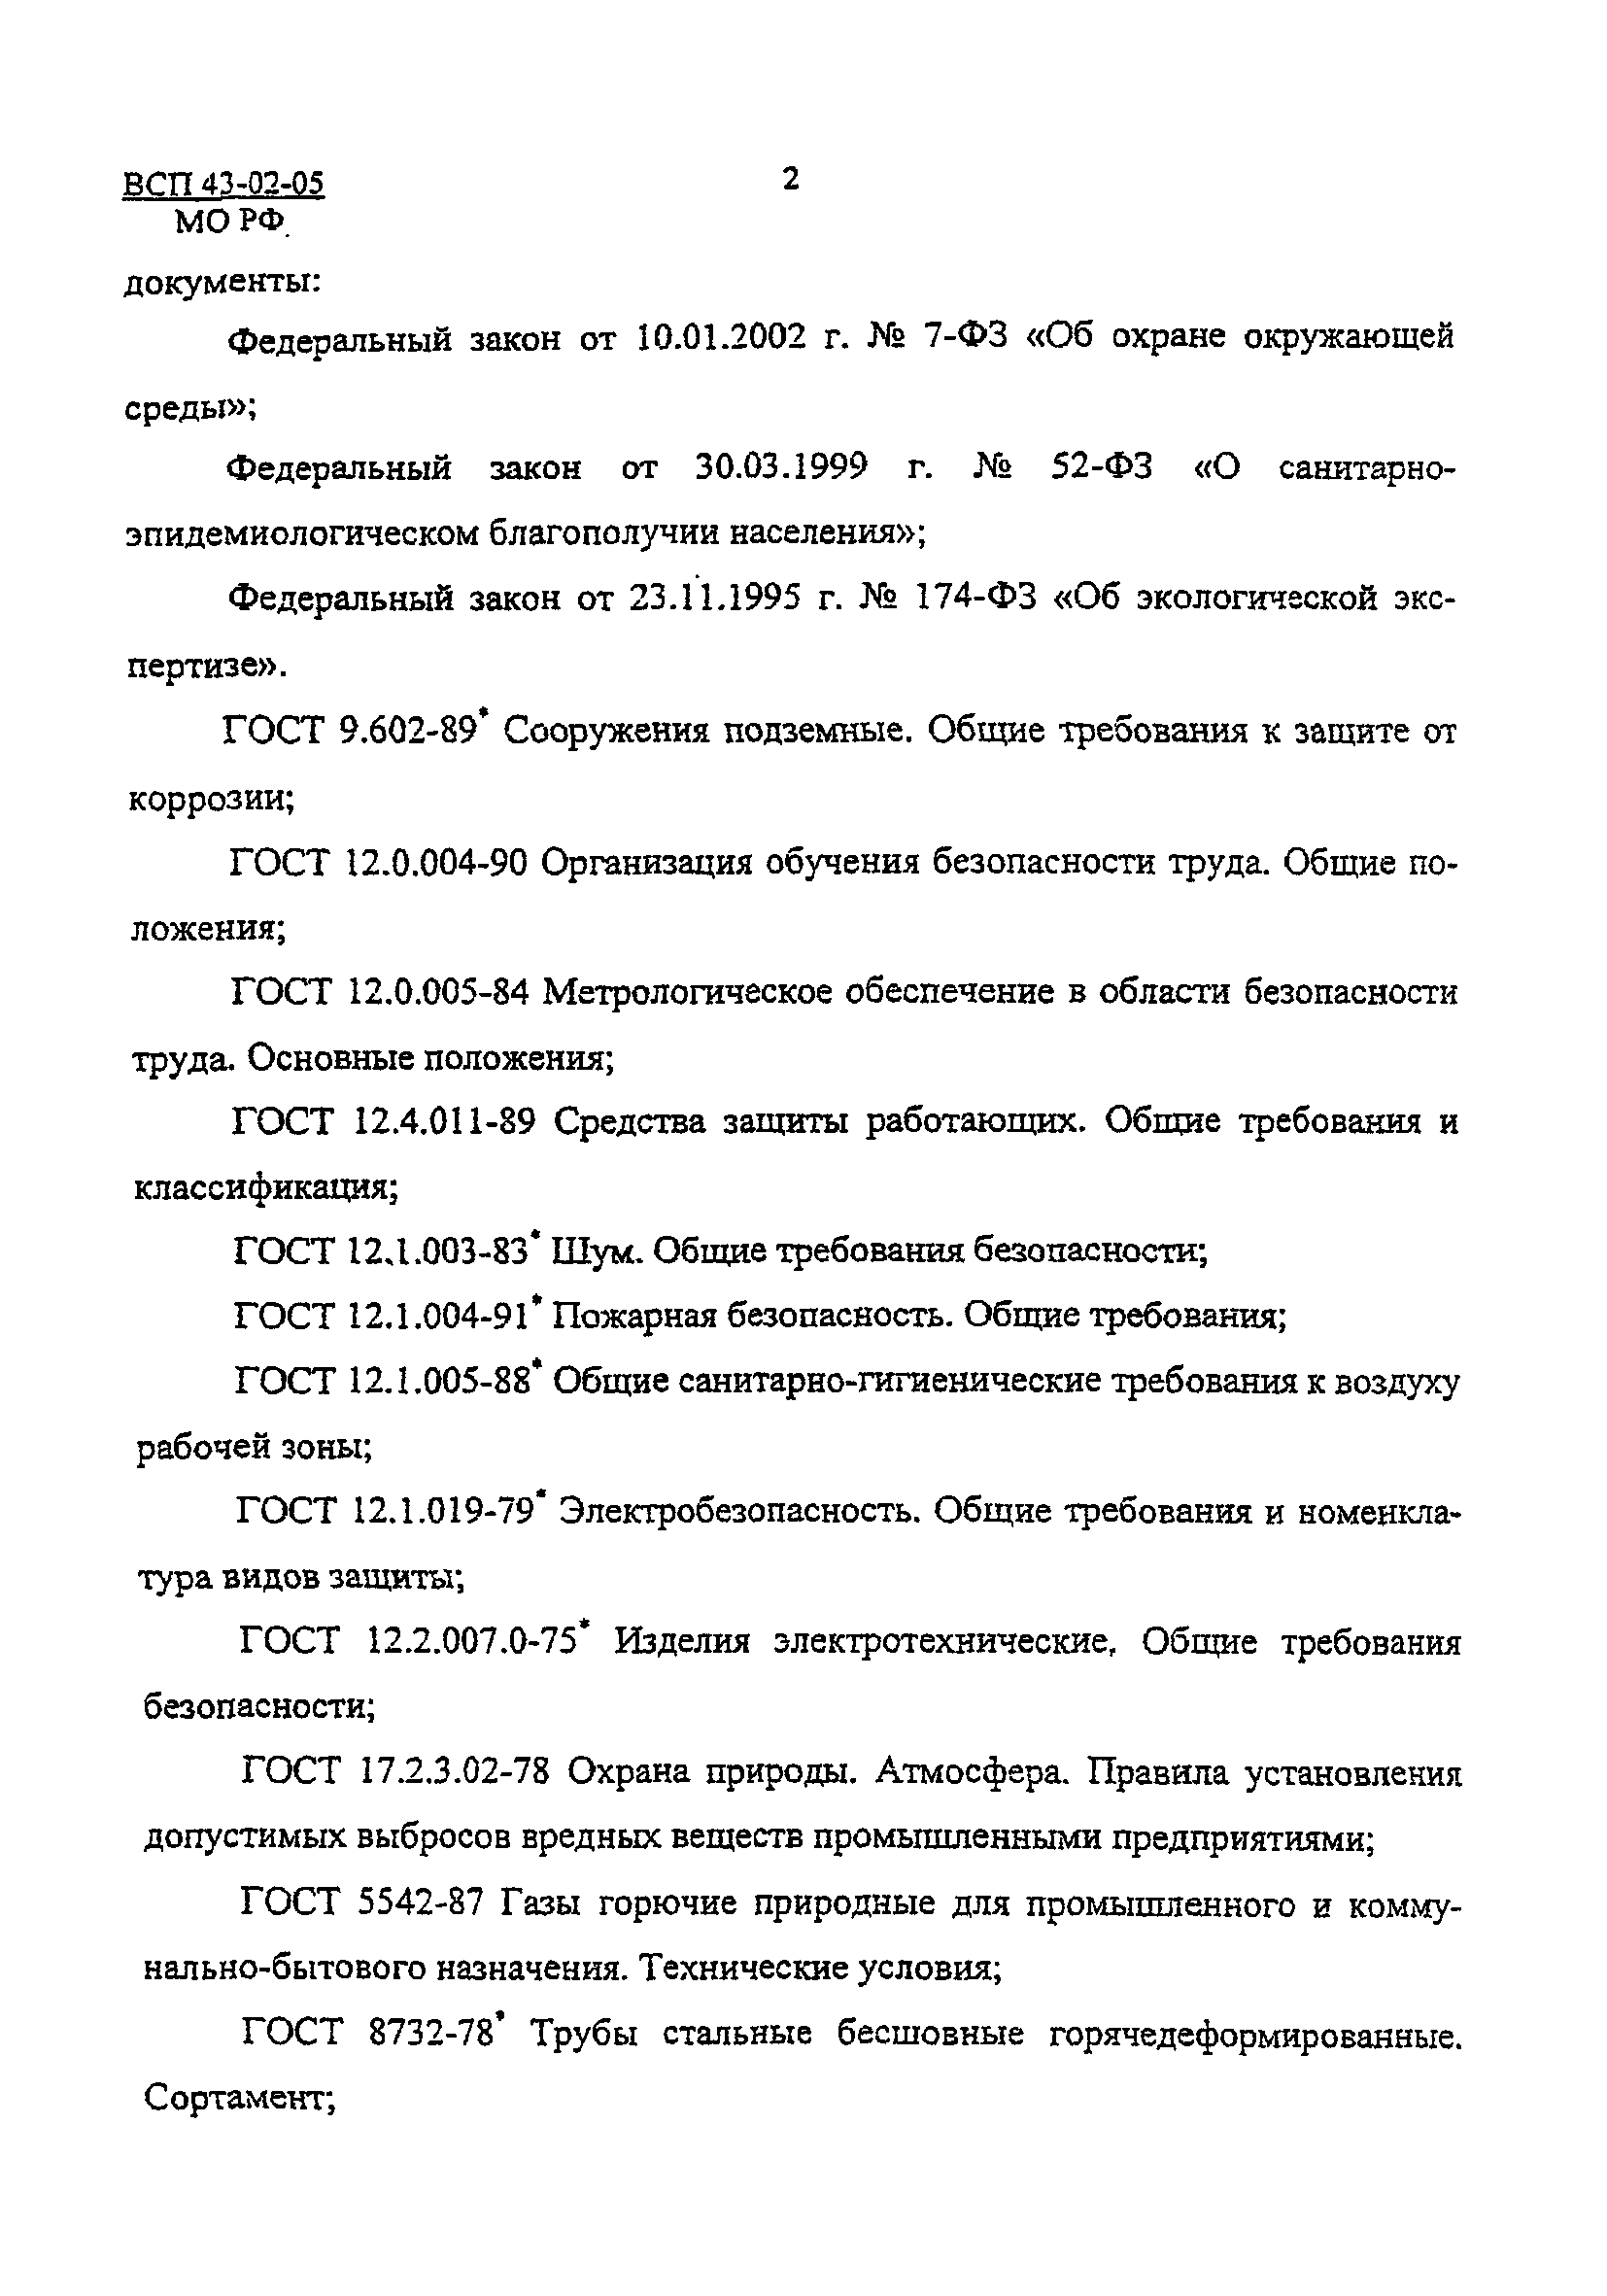 ВСП 43-02-05/МО РФ